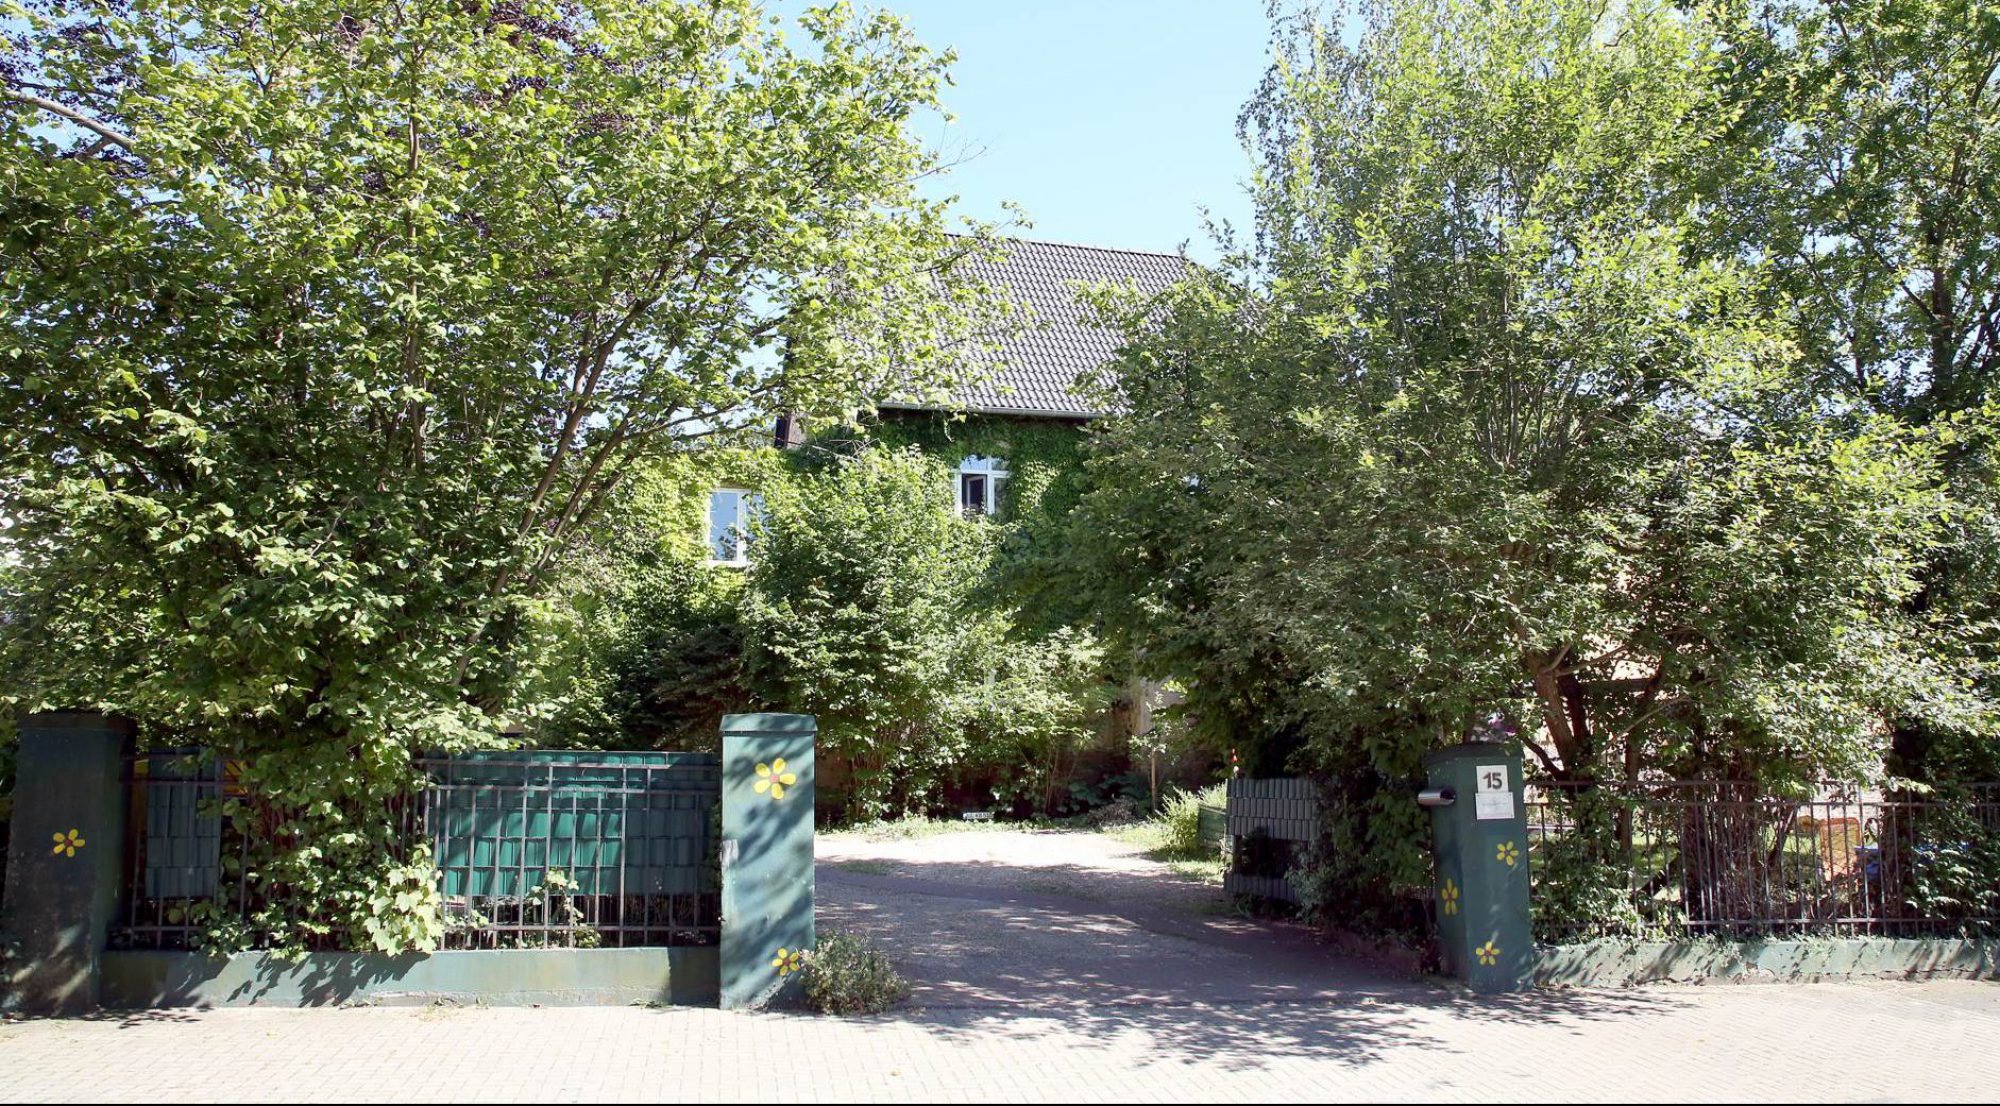 Heilpädagogisches Kinderheim Bensberg